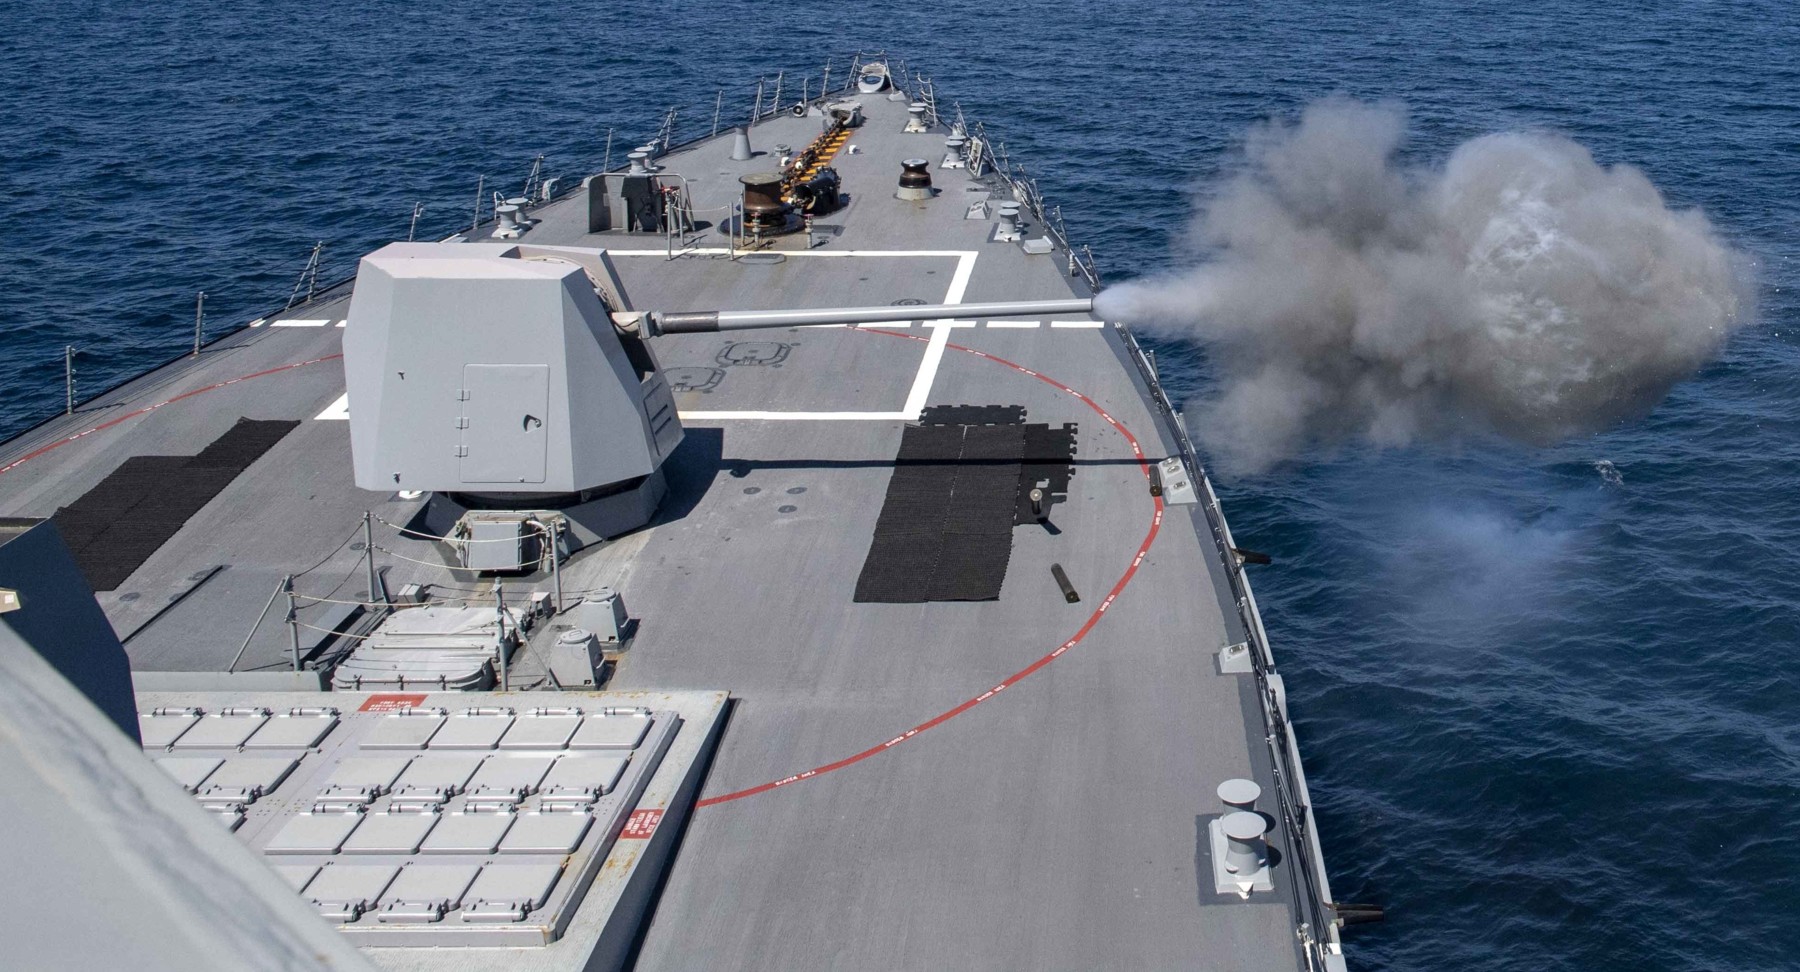 ddg-116 uss thomas hudner arleigh burke class guided missile destroyer us navy aegis 33 mk.45 mod.4 gun fire exercise